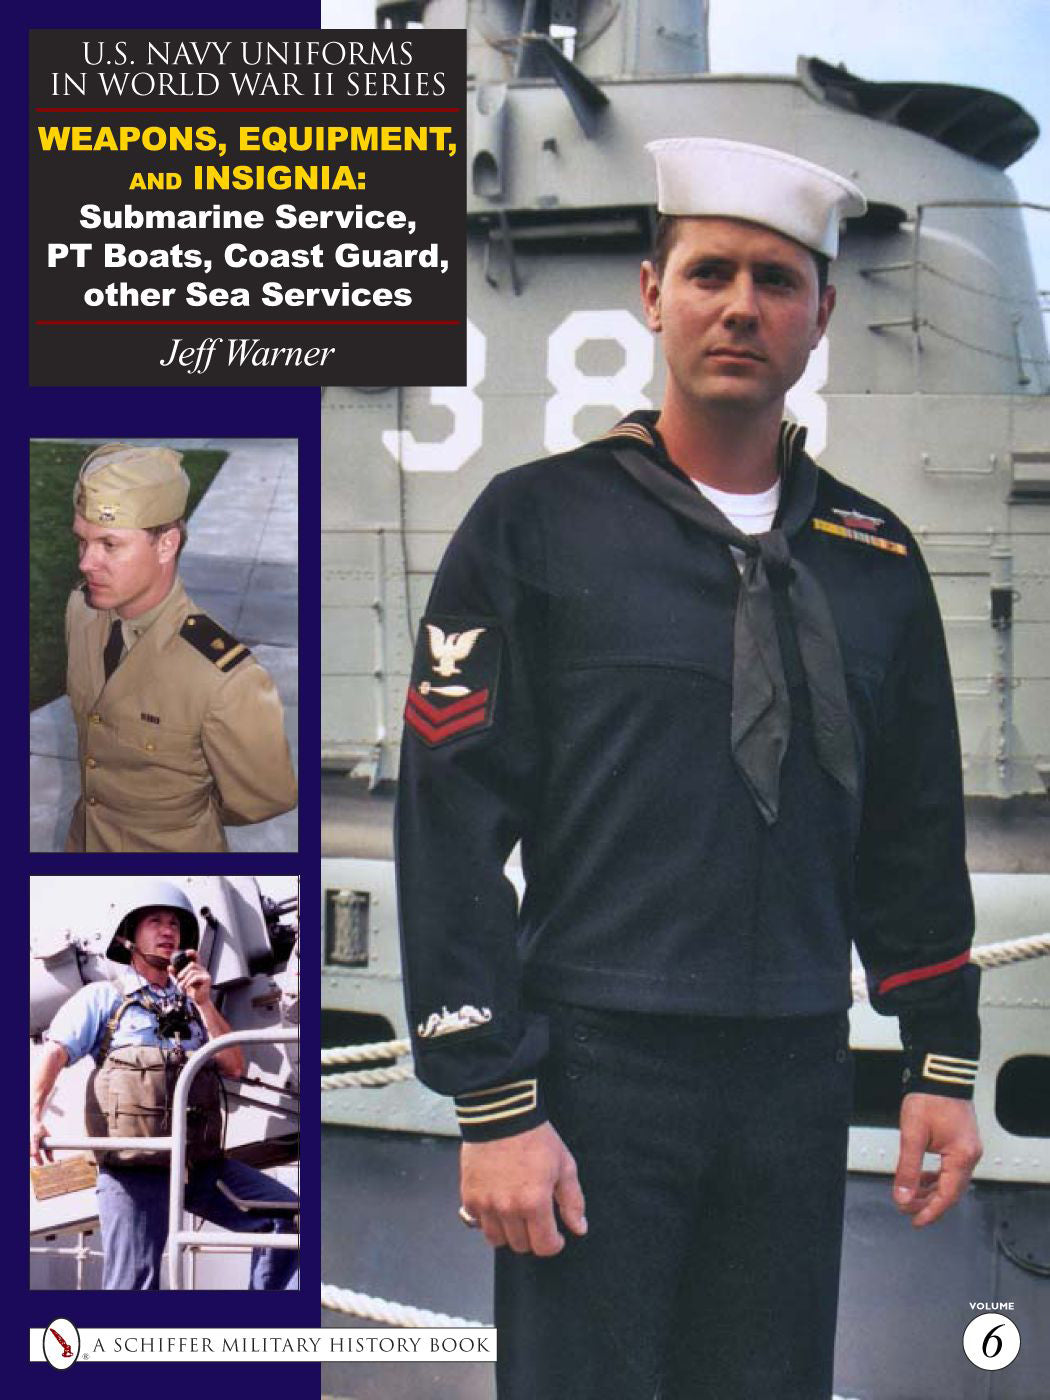 U.S. Navy Uniforms in World War II Series: Weapons, Equipment, Insignia Vol. 6